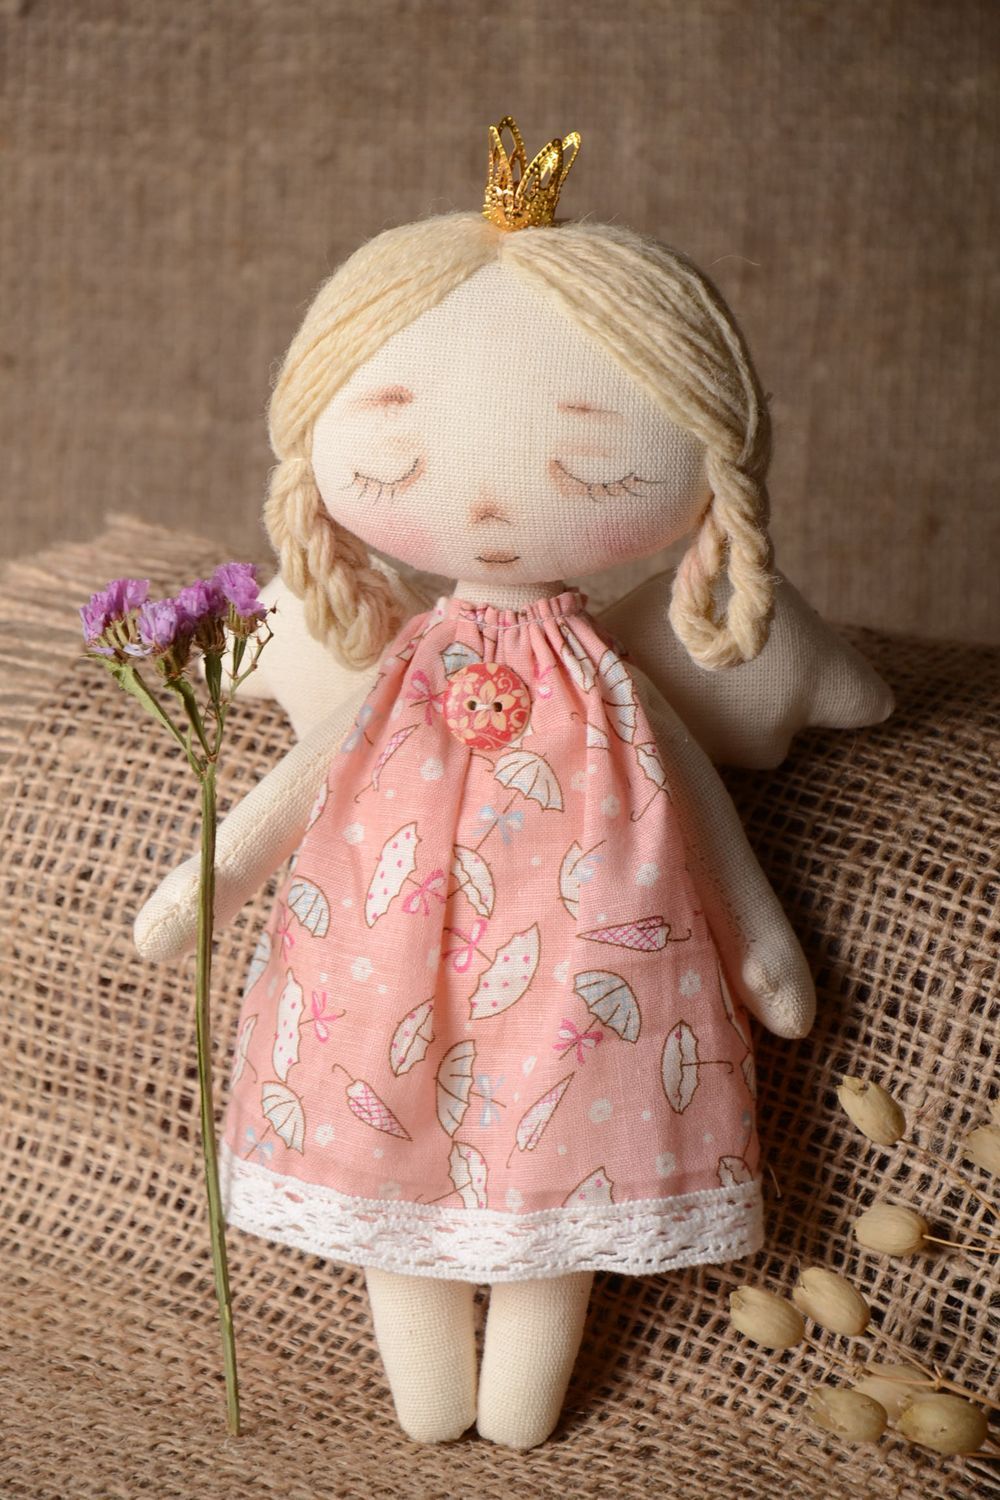 Handmade doll unusual doll for girls gift ideas nursery decor fabric doll photo 1